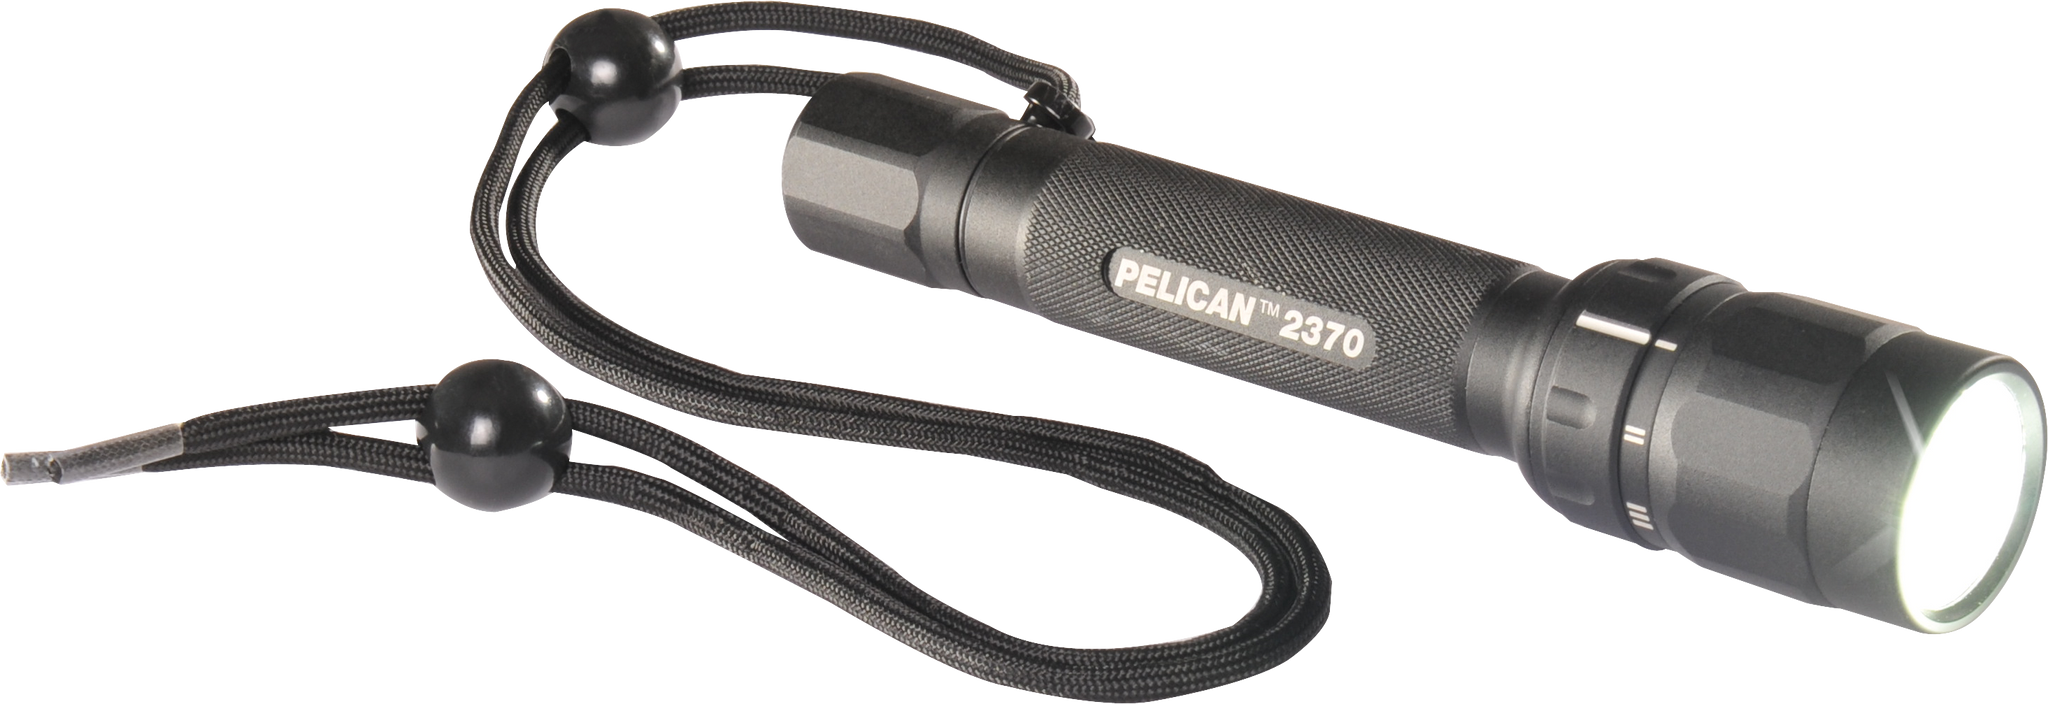 Pelican 2370 Tactical Flashlight - Dealer/Wholesale - Dealers